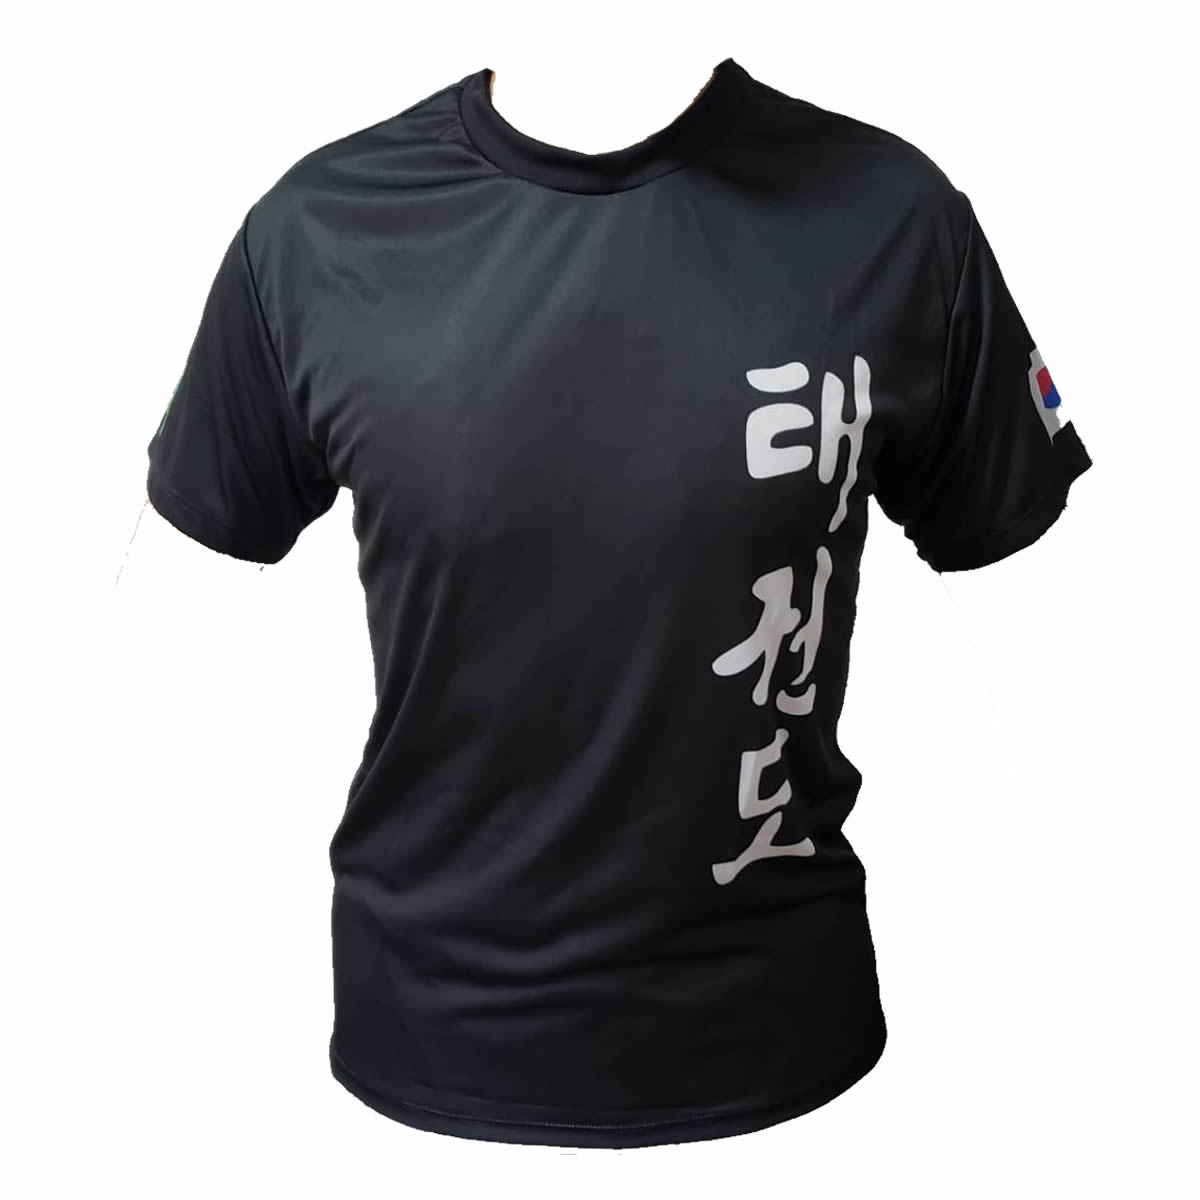 Camisa Camiseta Taekwondo Korea - Fb-2058 P - Preta - Loja do Competidor